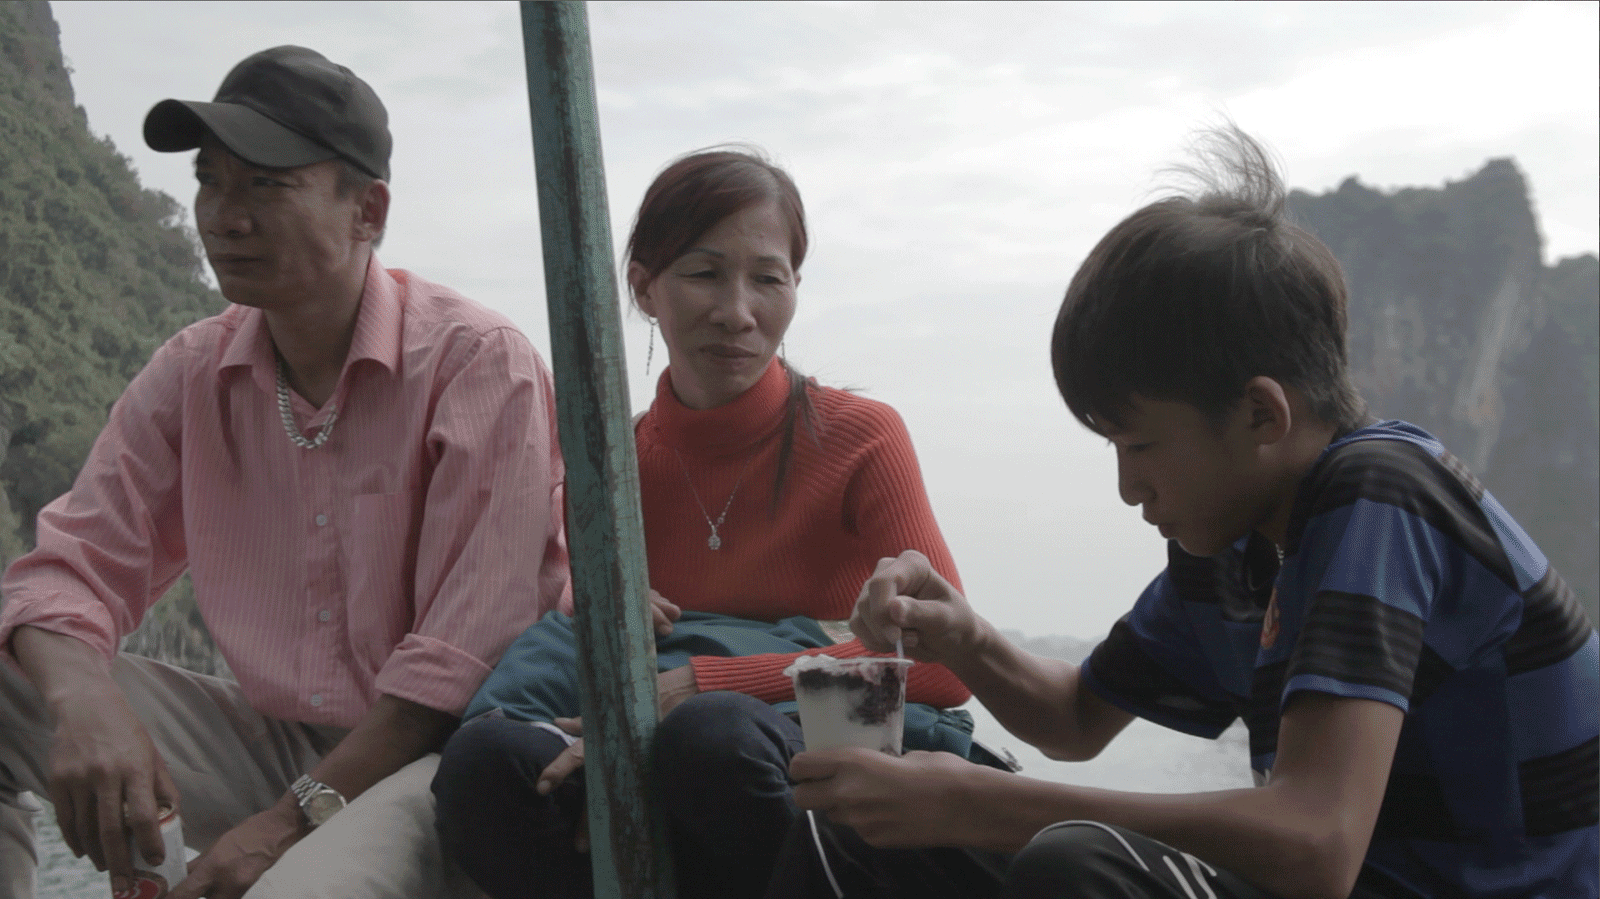 Standbild aus dem Dokumentarfilm "Farewell Halong"